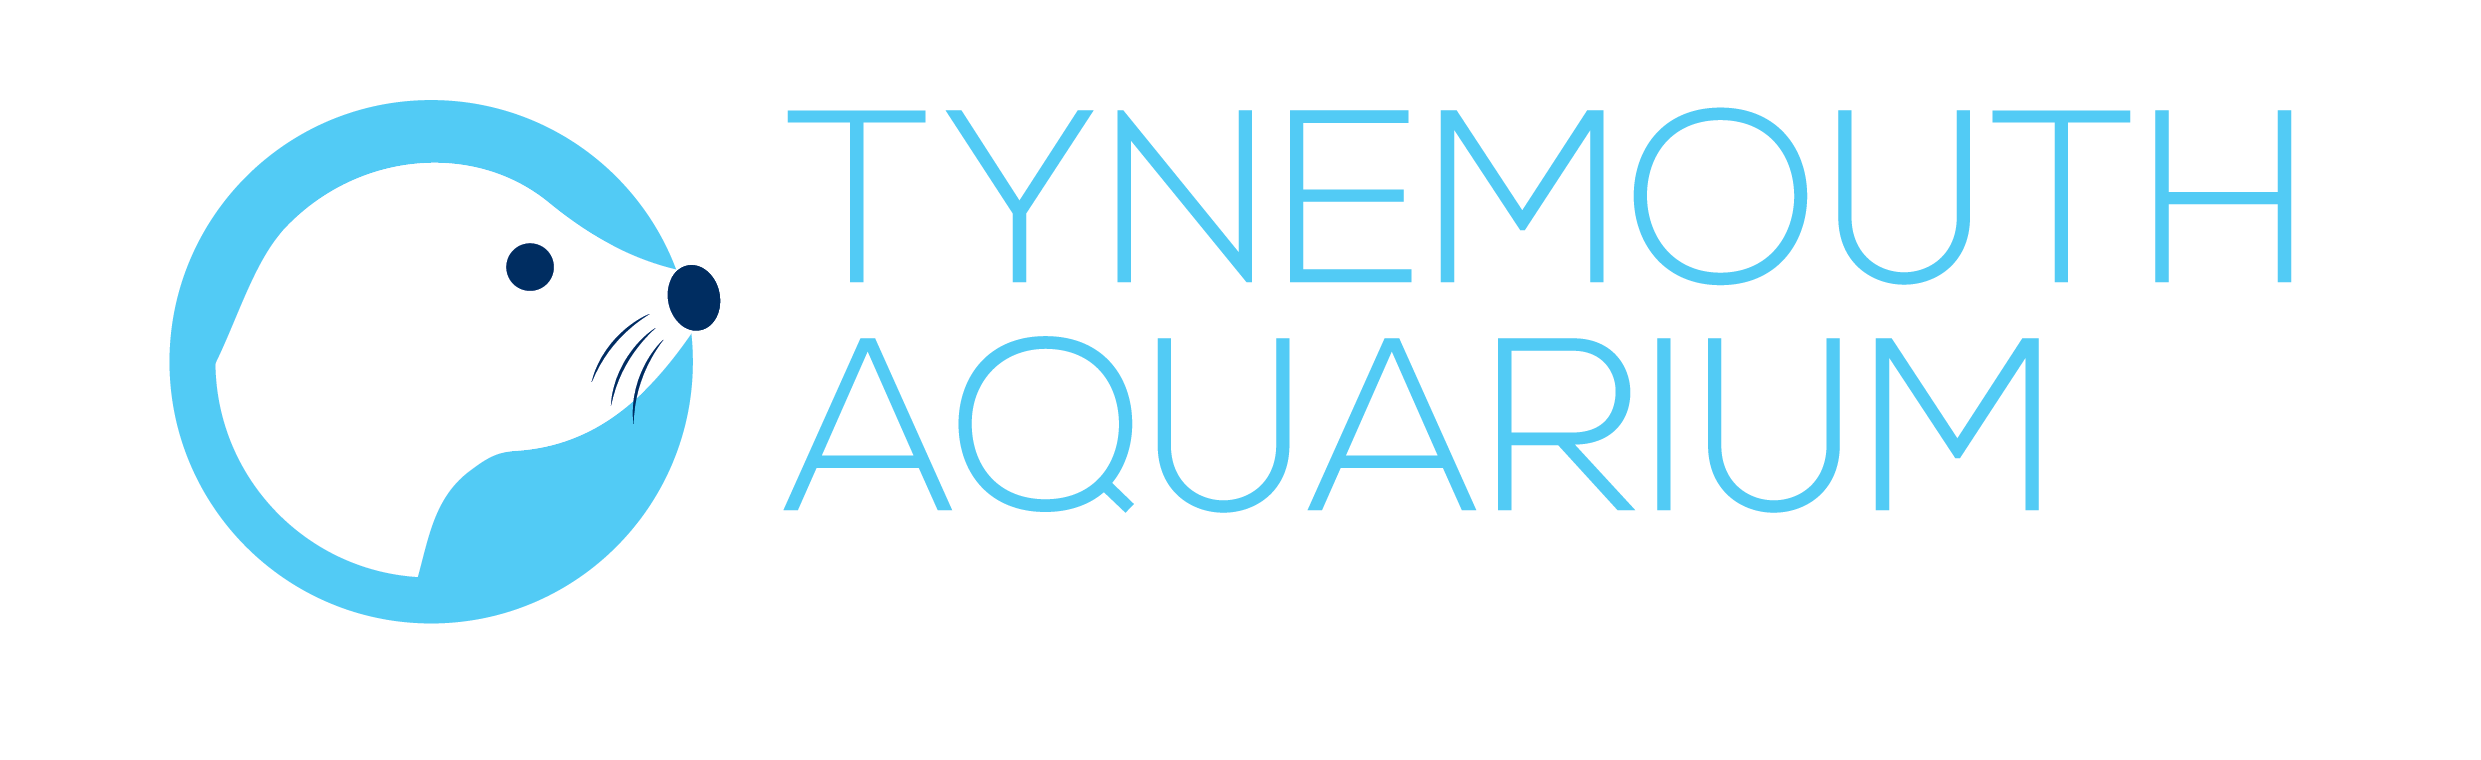 Tynemouth Aquarium logo